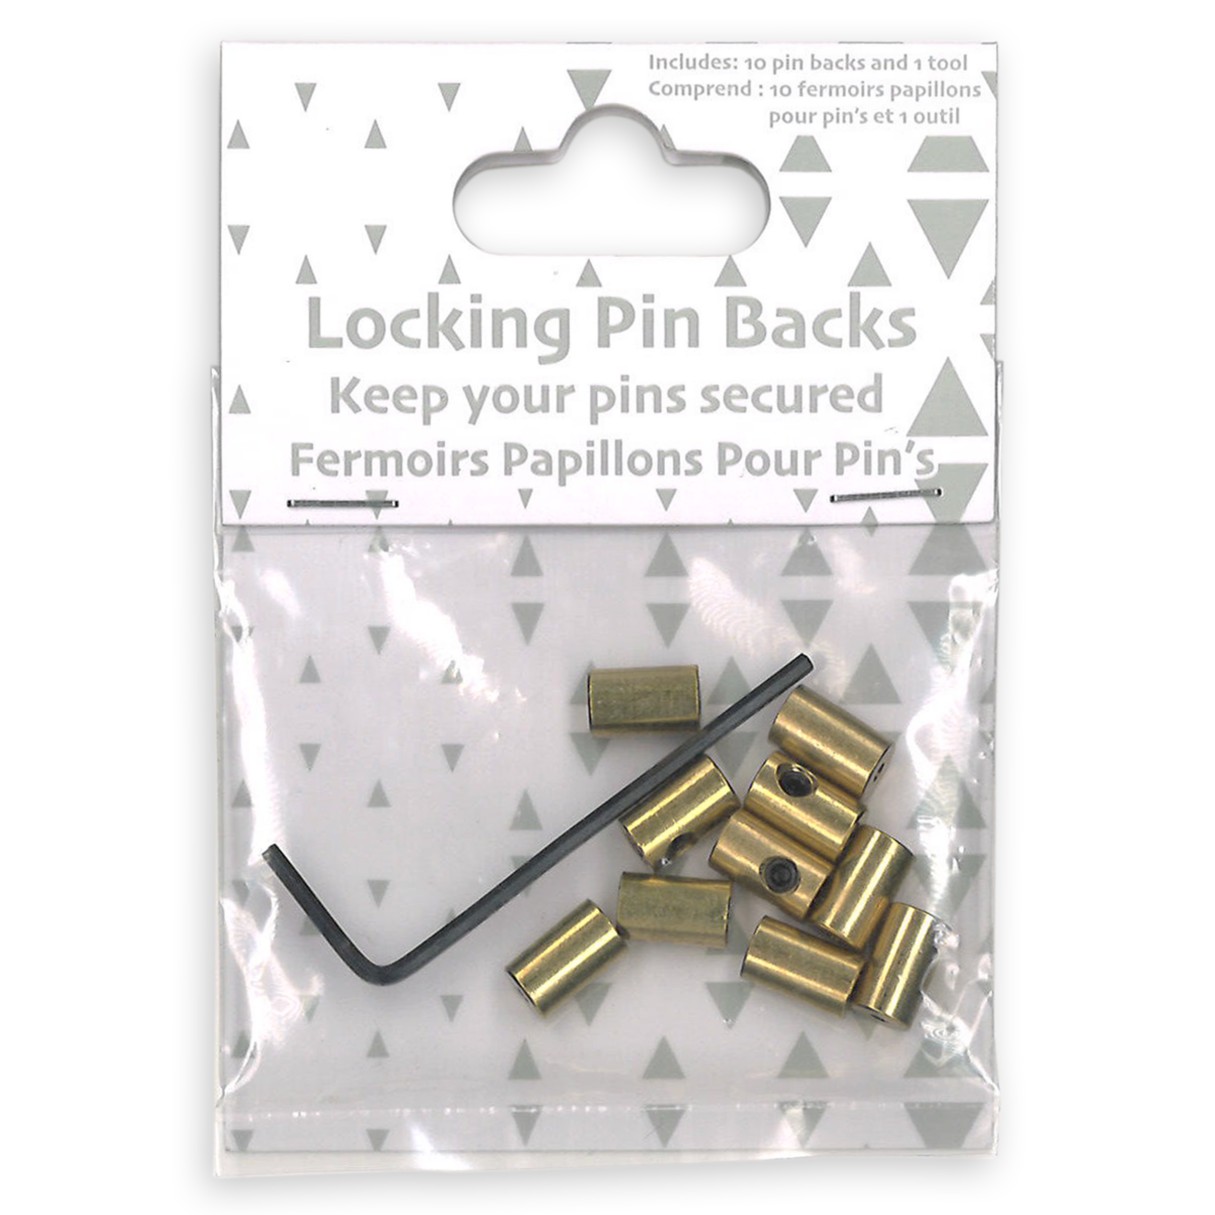 Disney Locking Pin Backs (set of 12) BRAND NEW. Never Used.